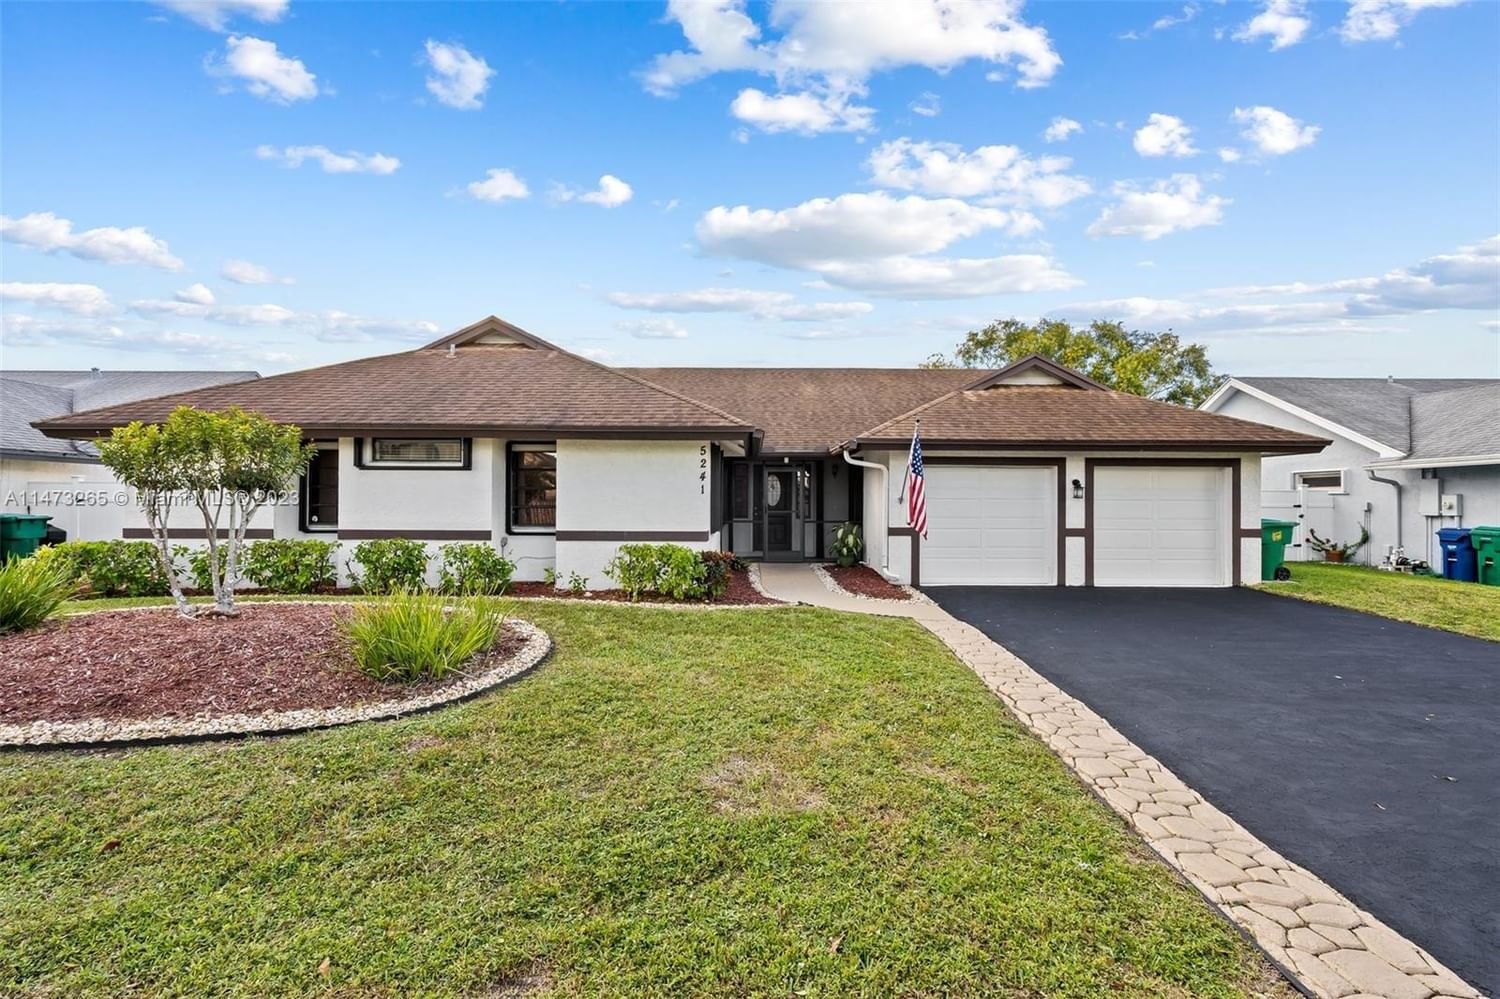 Real estate property located at 5241 84th Ave, Broward County, CITY OF LAUDERHILL SEC TH, Lauderhill, FL